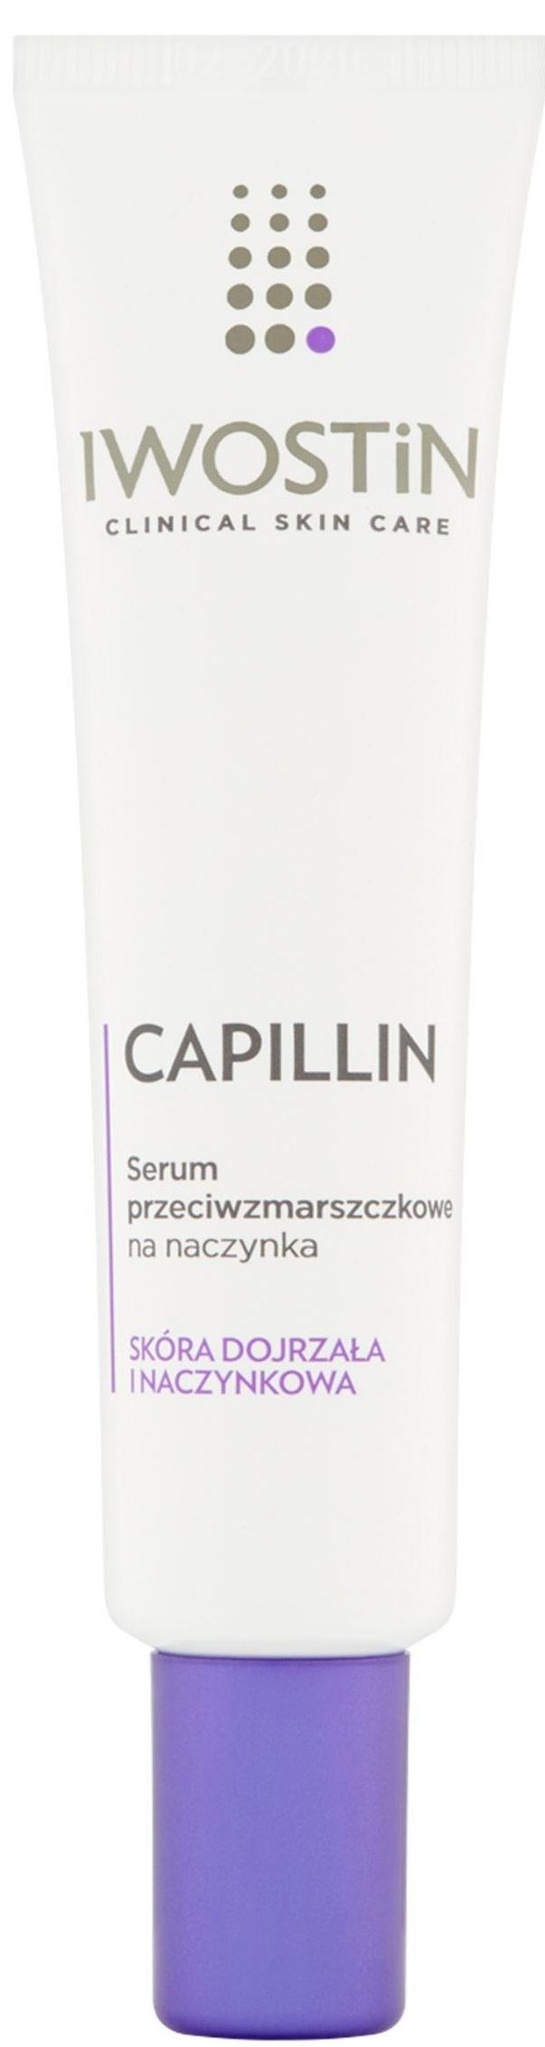 Iwostin Capillin Serum